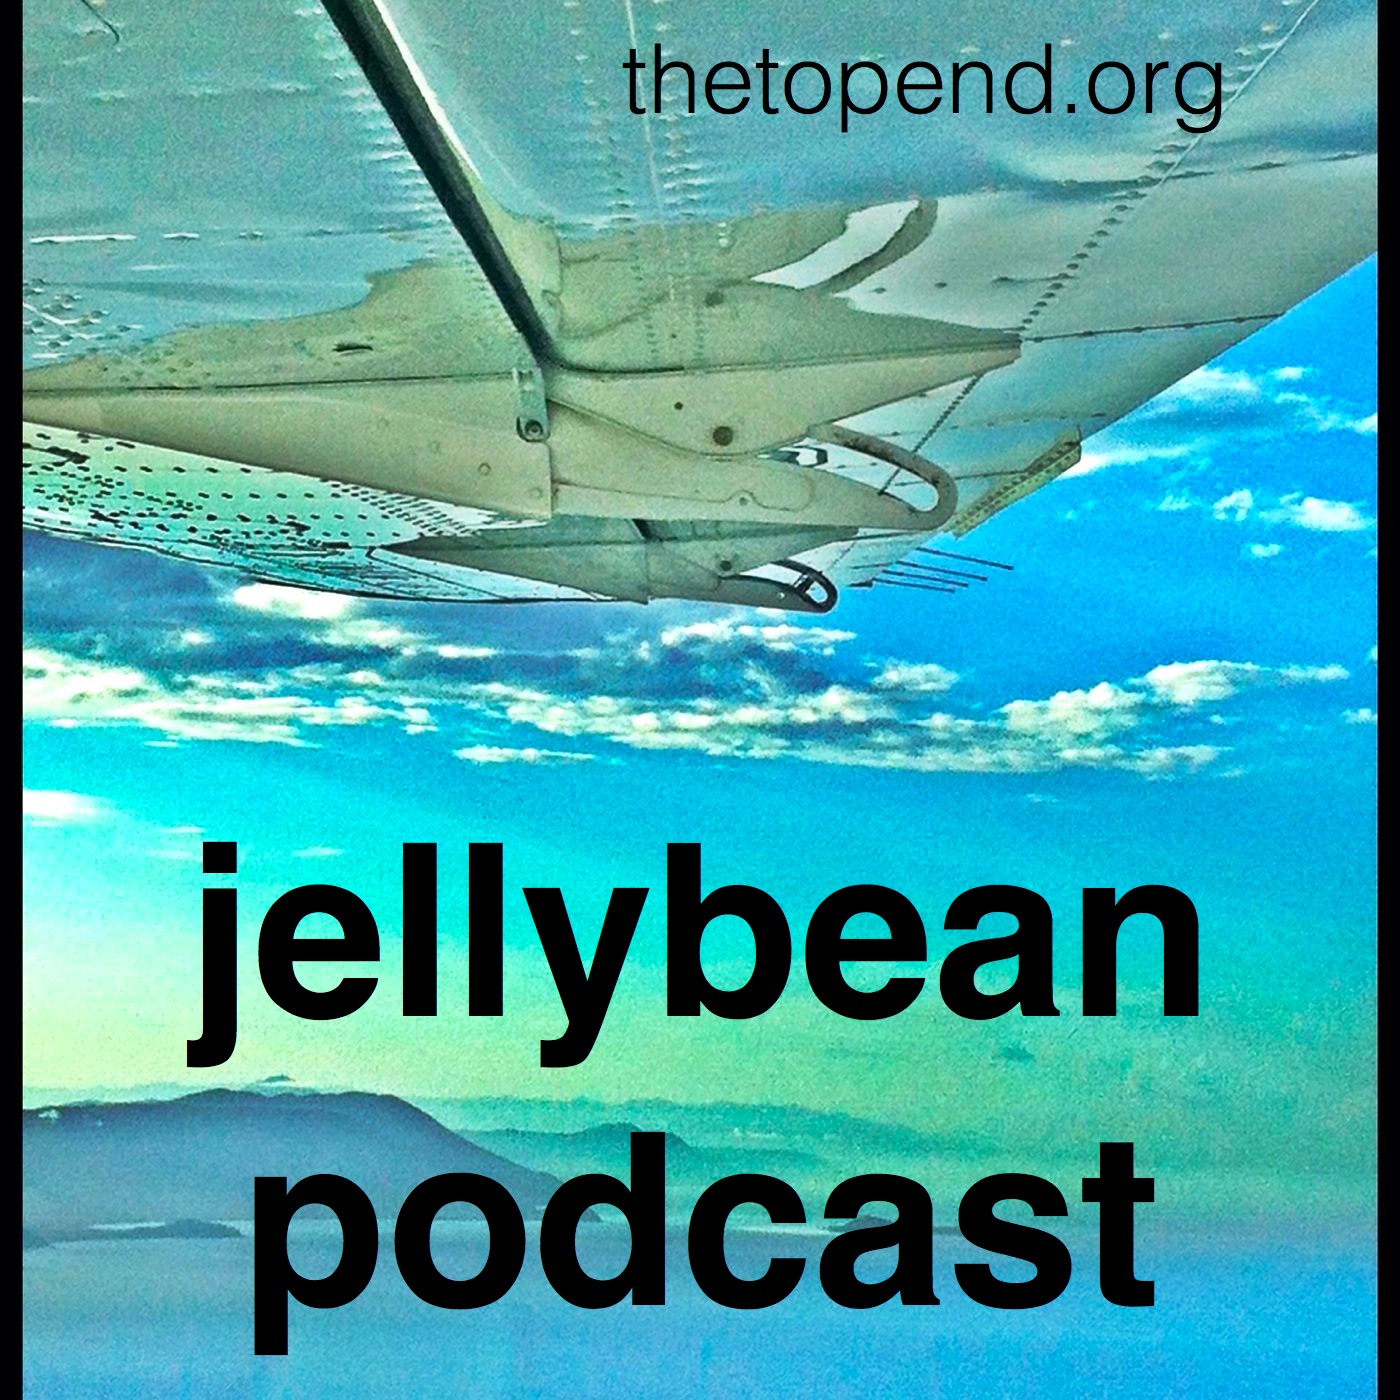 Jellybean Podcast with Doug Lynch